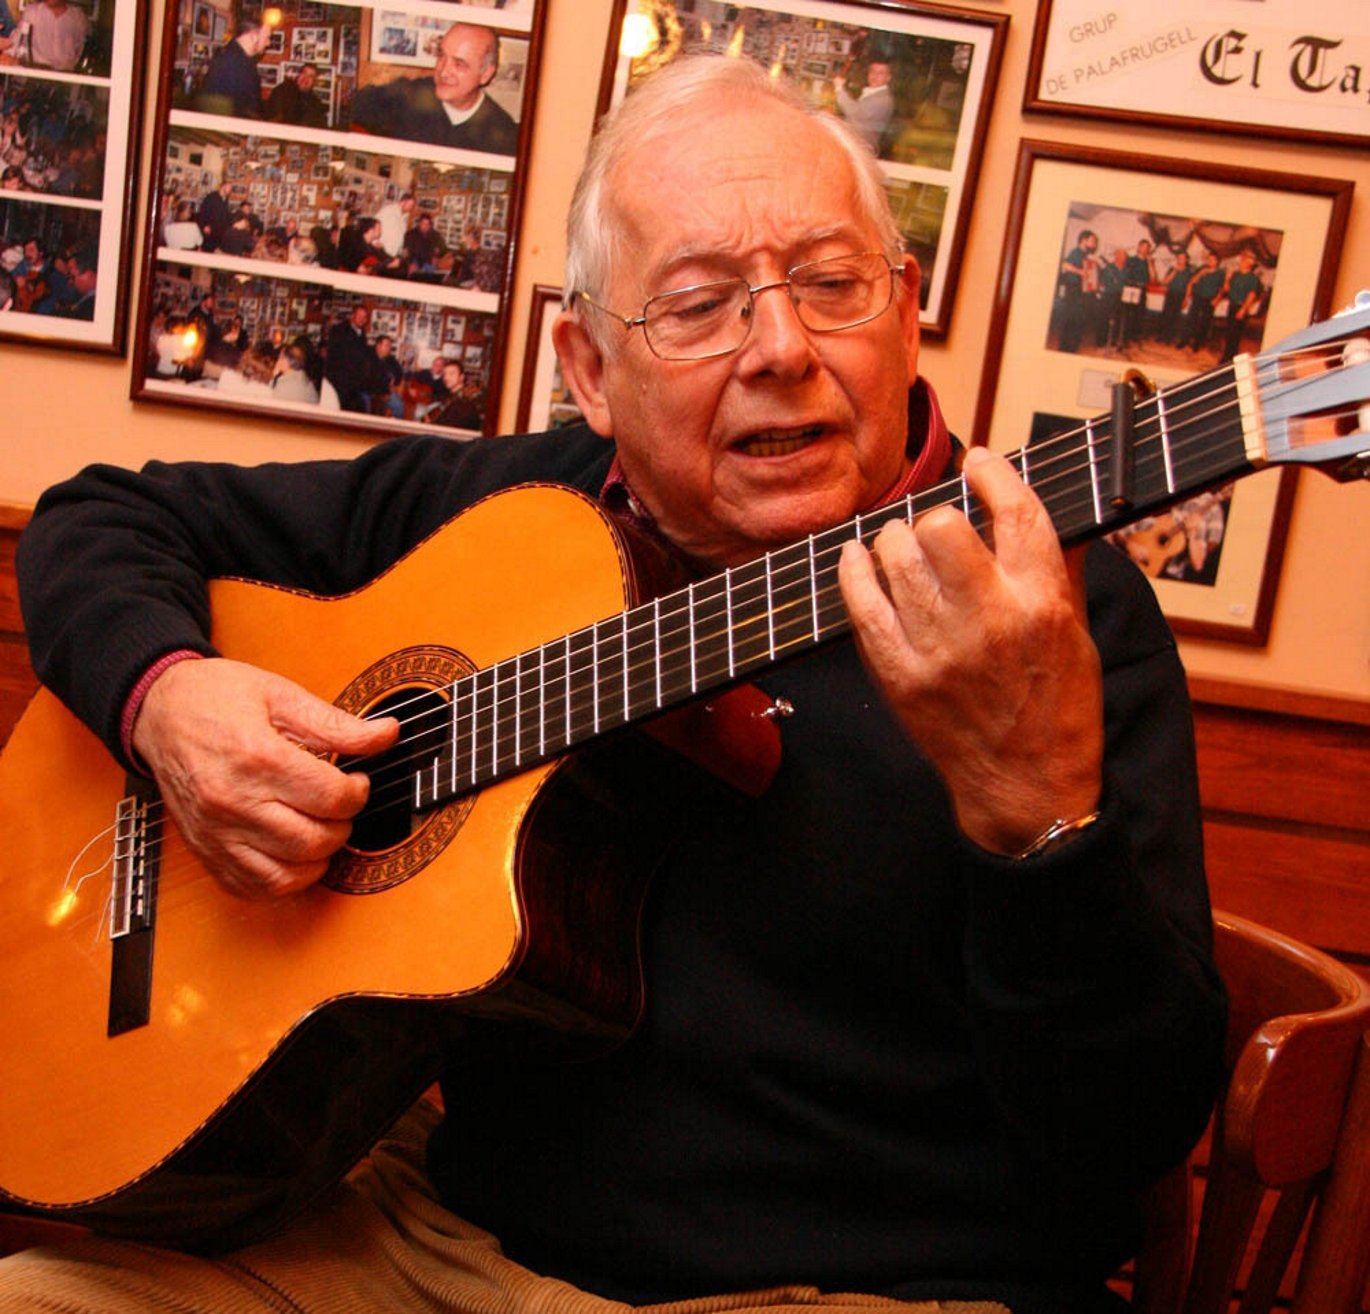 'El hombre de la guitarra': tributo a Josep Bastons y a la habanera